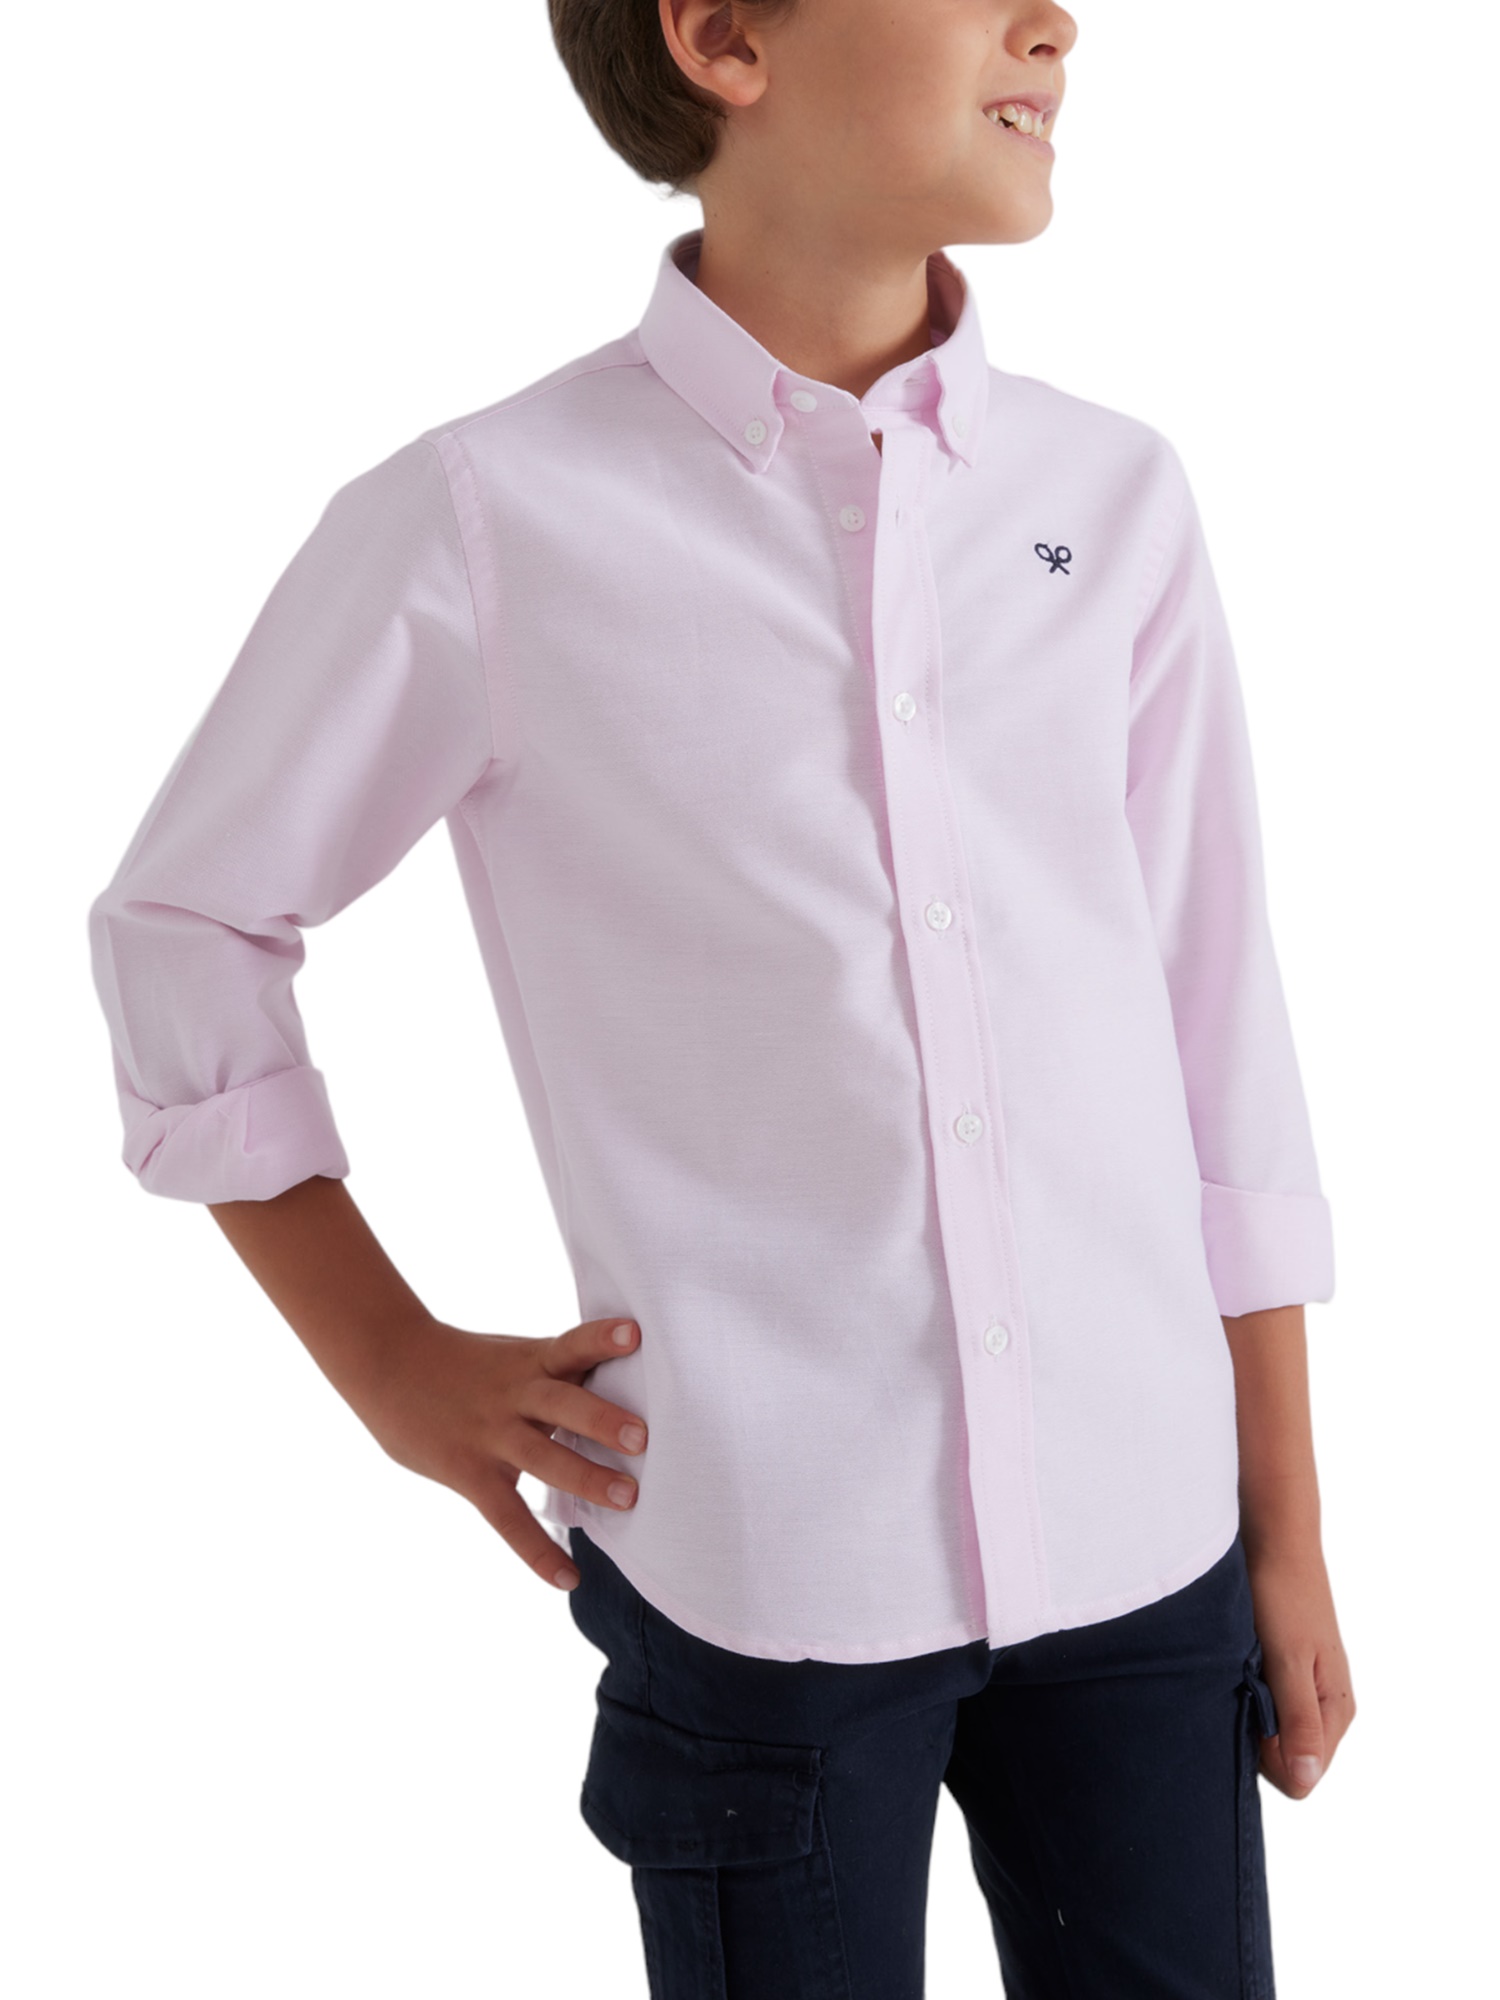 Silbon - Silbon - Camisa sport kids oxford style rosa para Niño